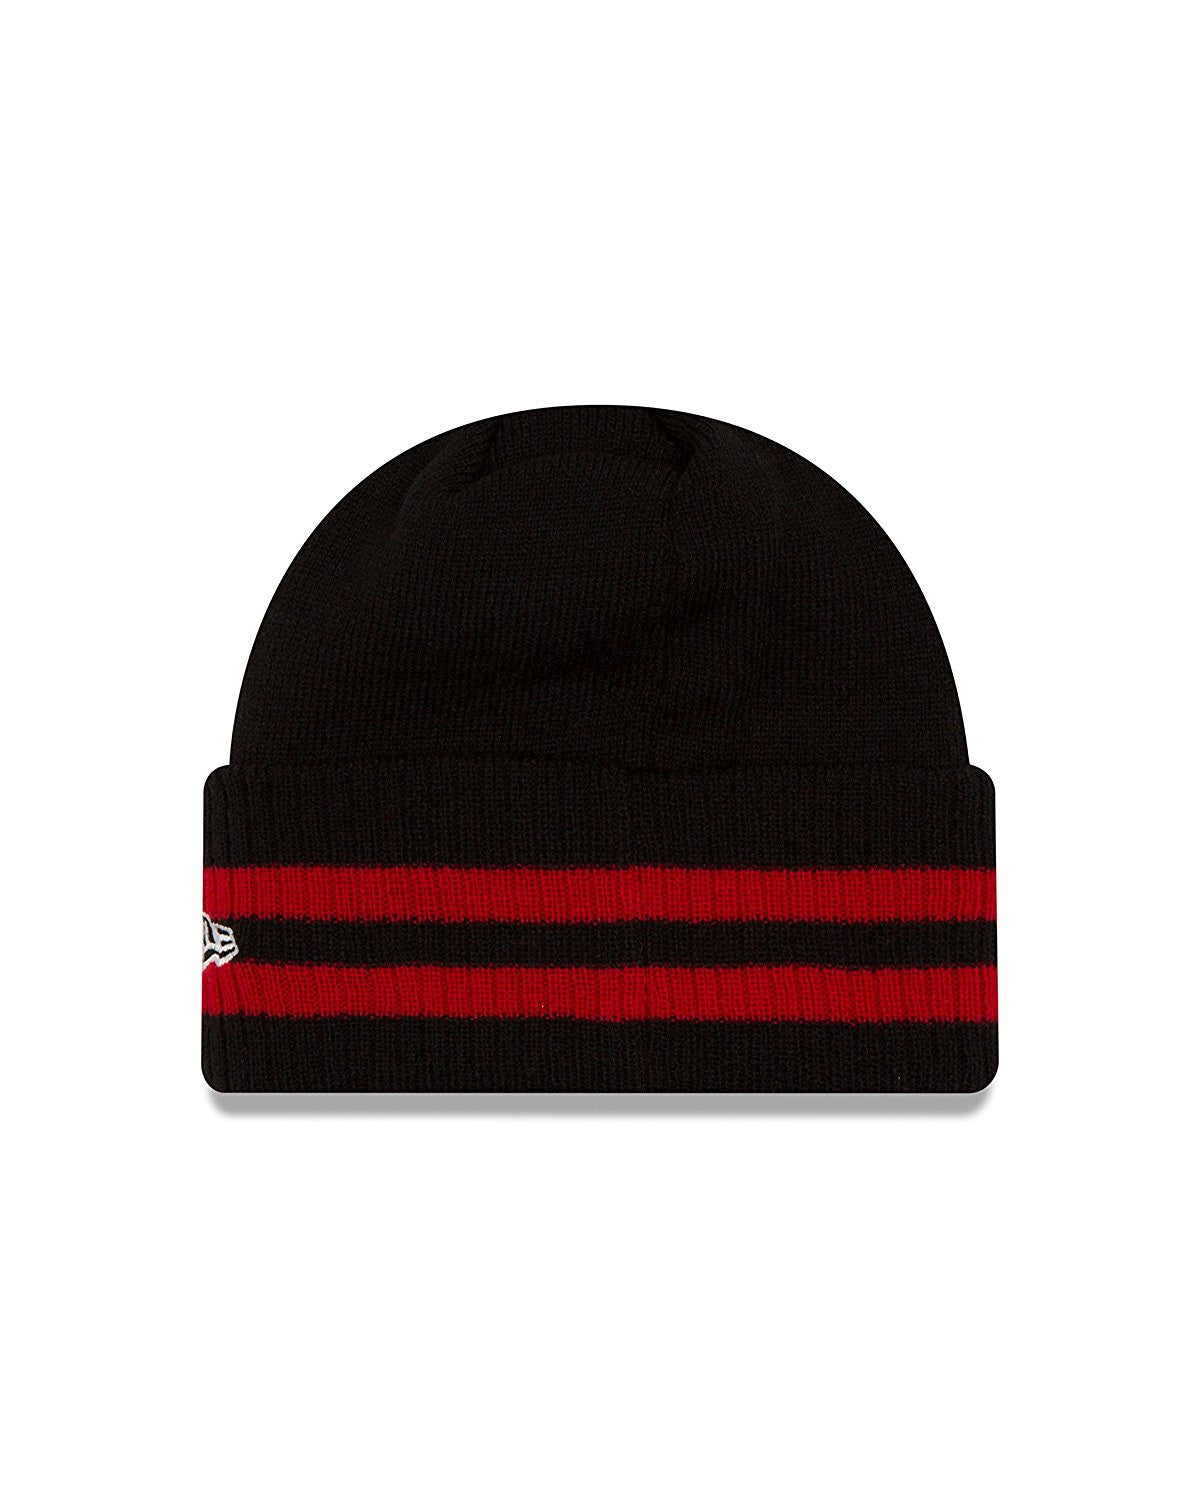 NHL Chicago Blackhawks 2 Striped Remix Knit Beanie, One Size, Black